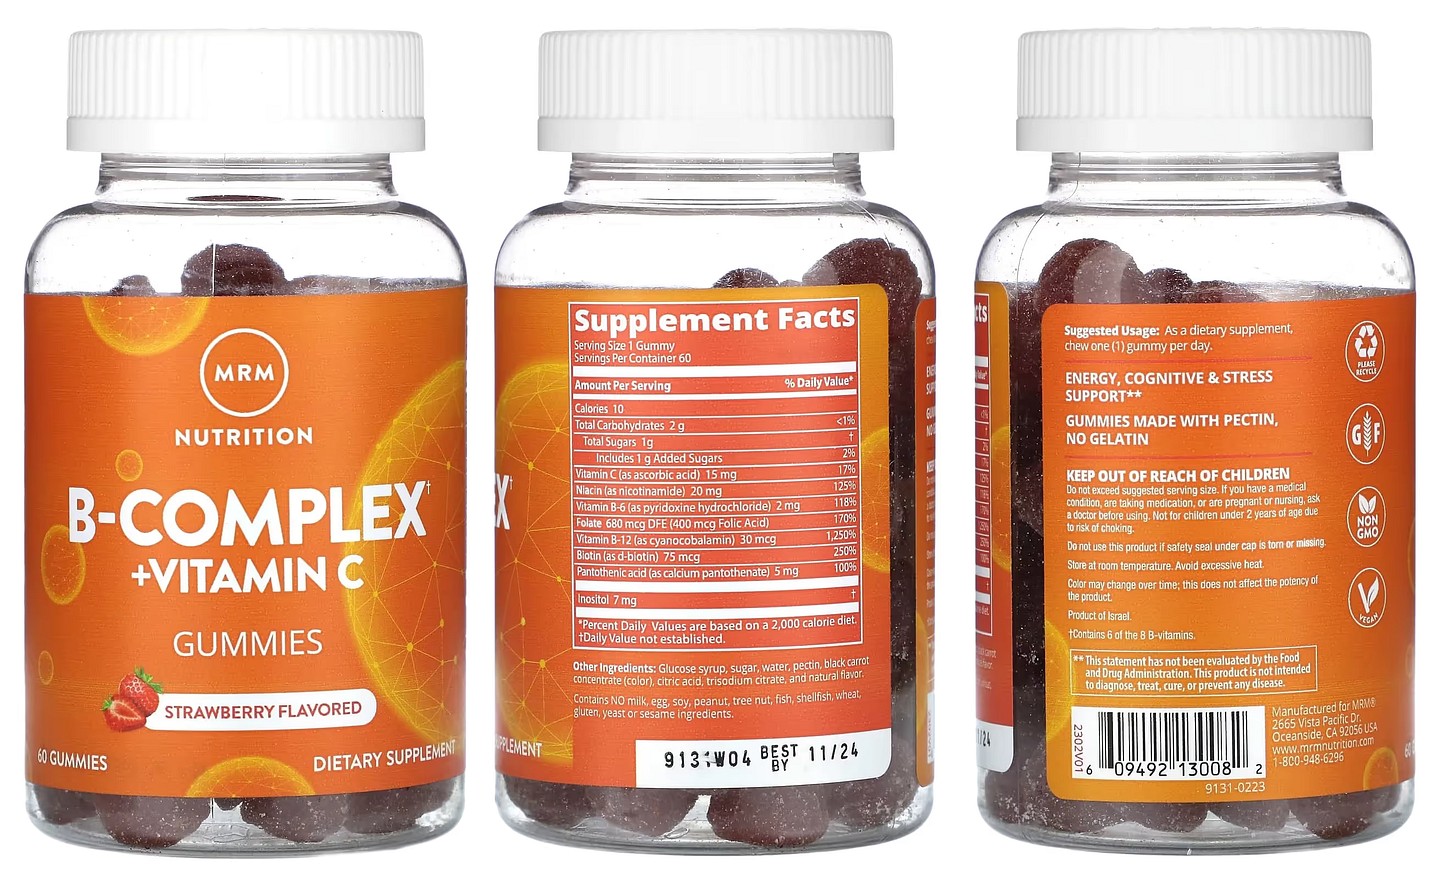 MRM Nutrition, B-Complex + Vitamin C Gummies packaging